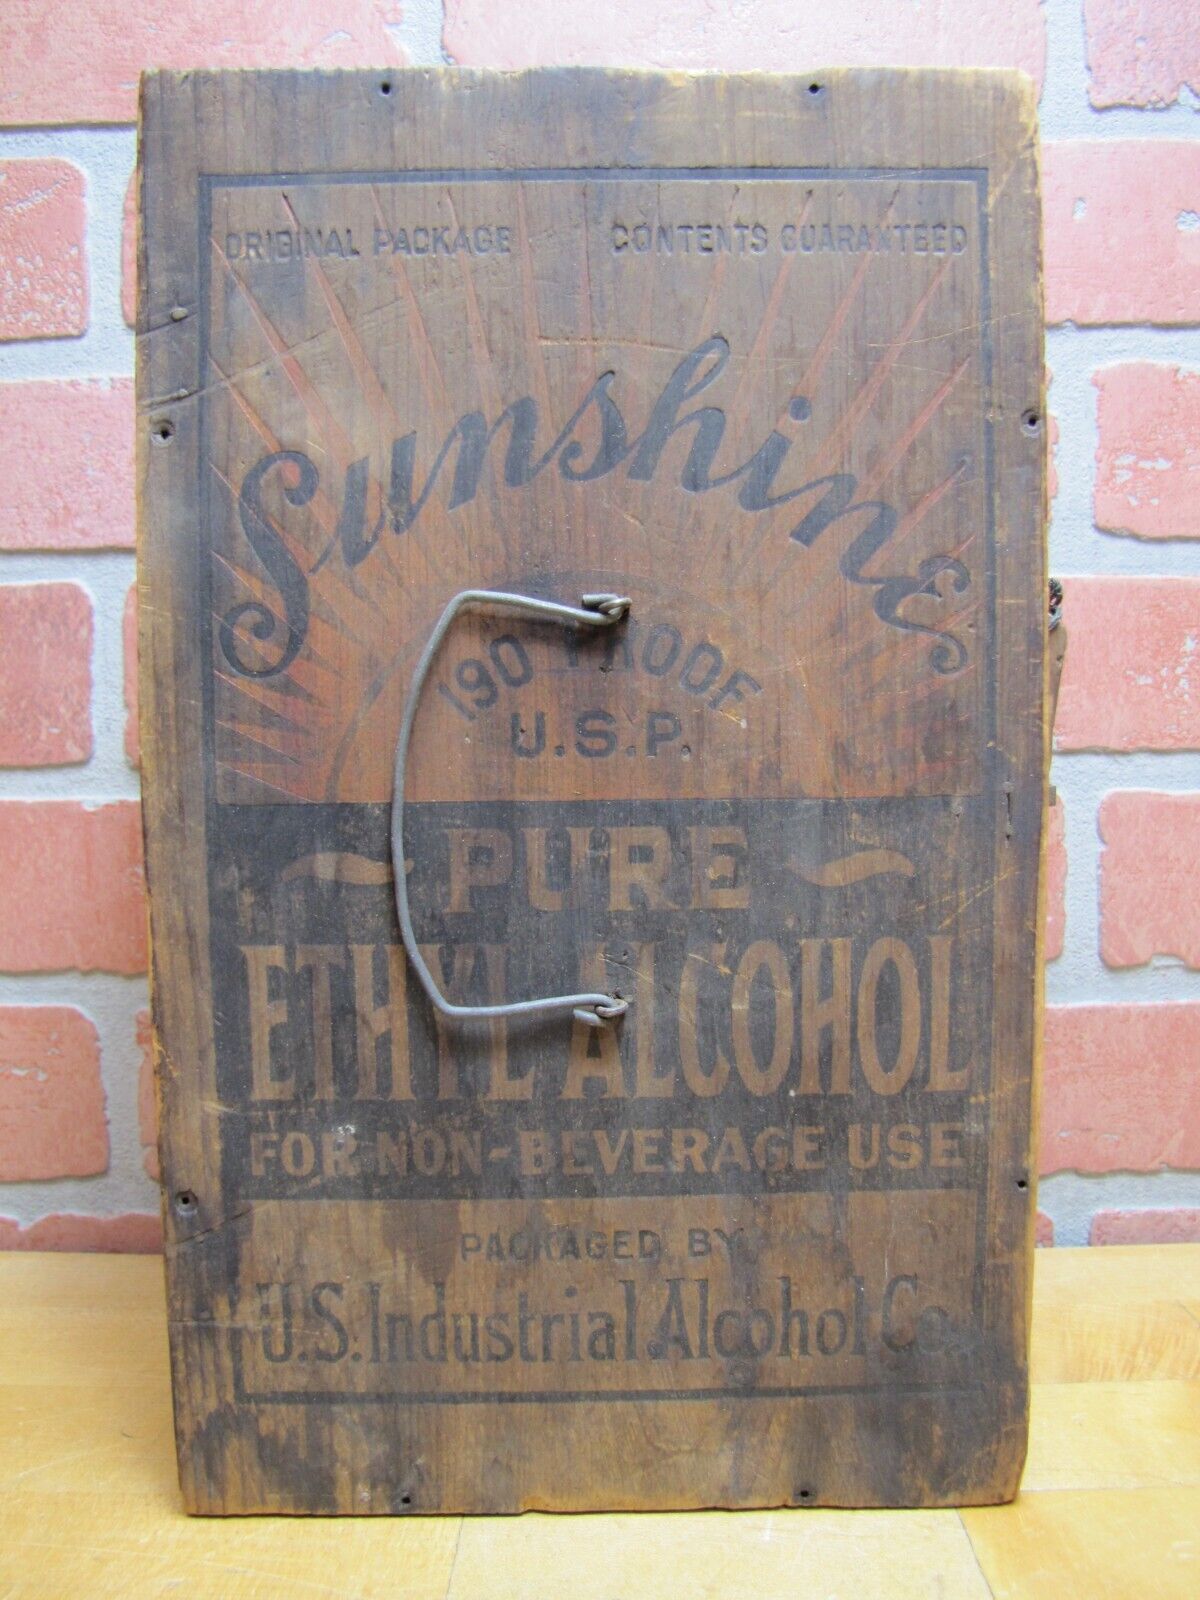 SUNSHINE PURE ETHYL ALCOHOL FOR NON-BEVERAGE USE Prohibition Era Wooden Ad Box